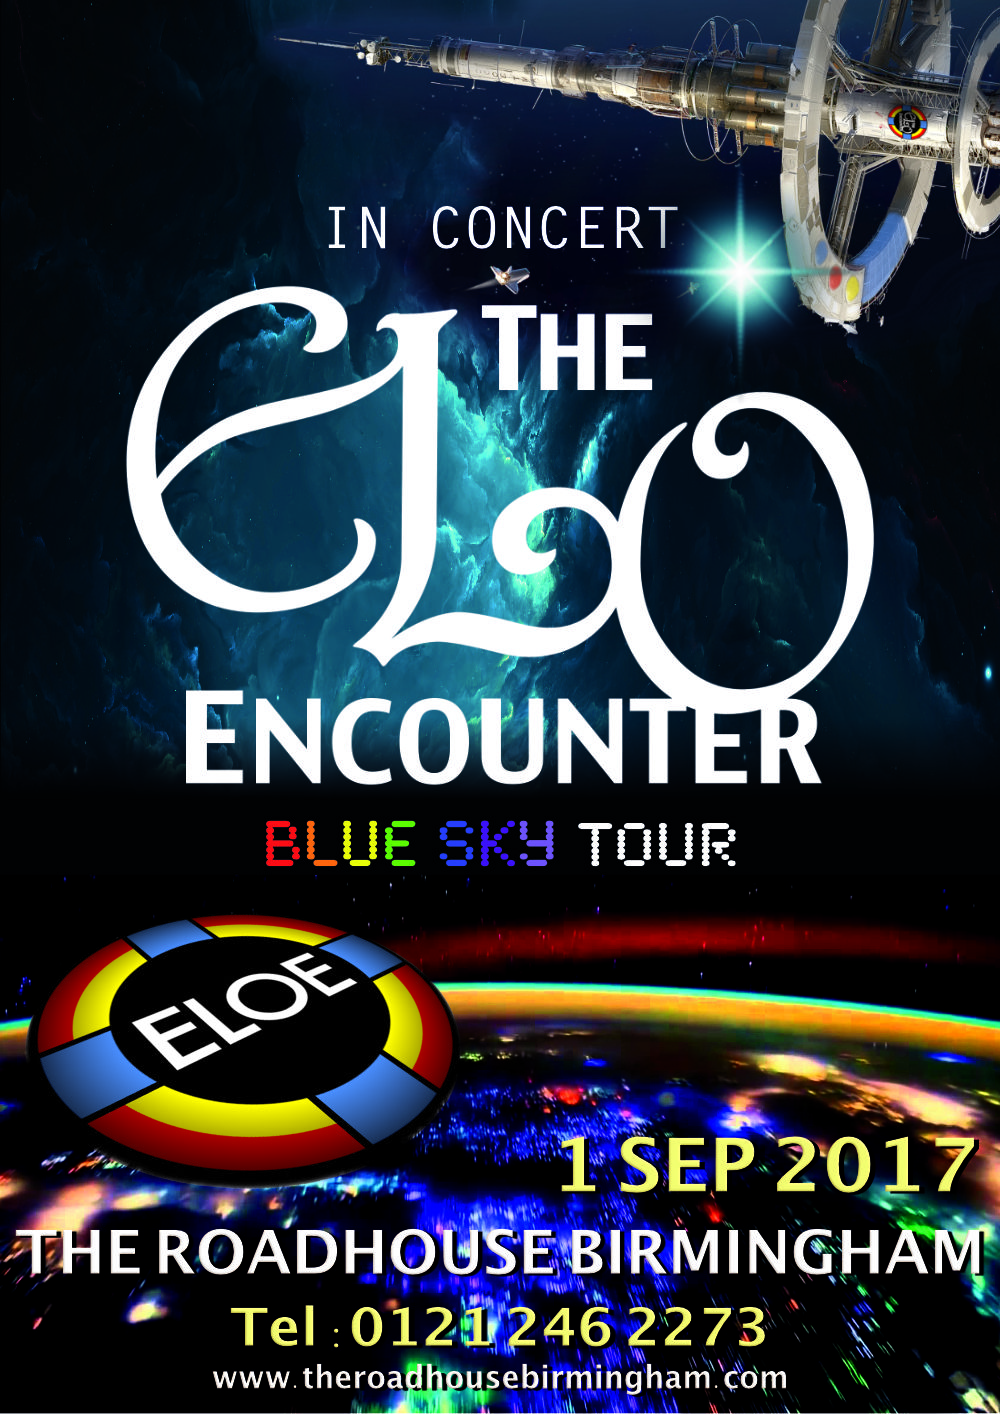 The Roadhouse Birmingham 1 Sep 2017 - ELO Encounter Poster